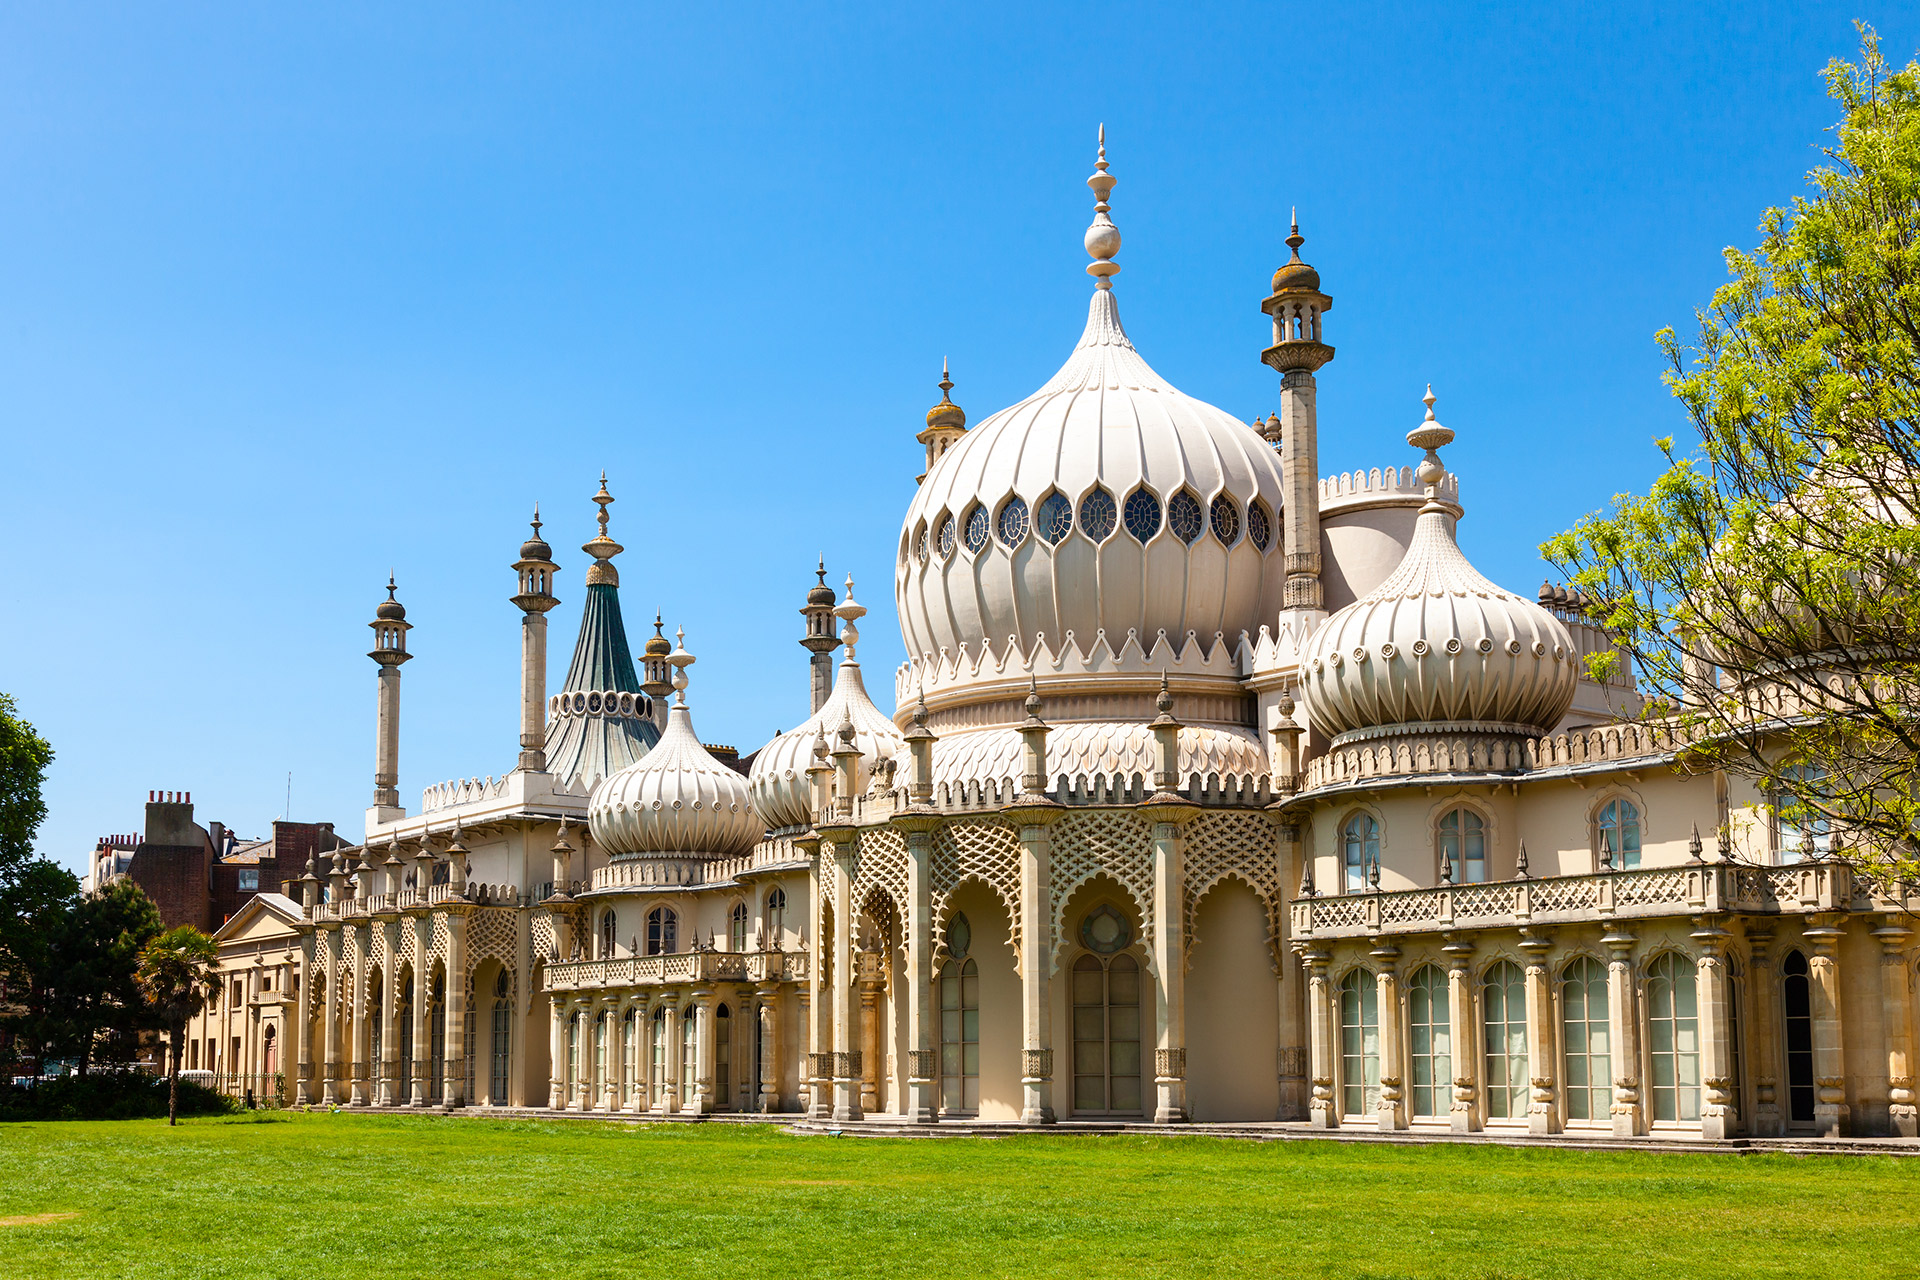 Brighton's Royal Pavillon